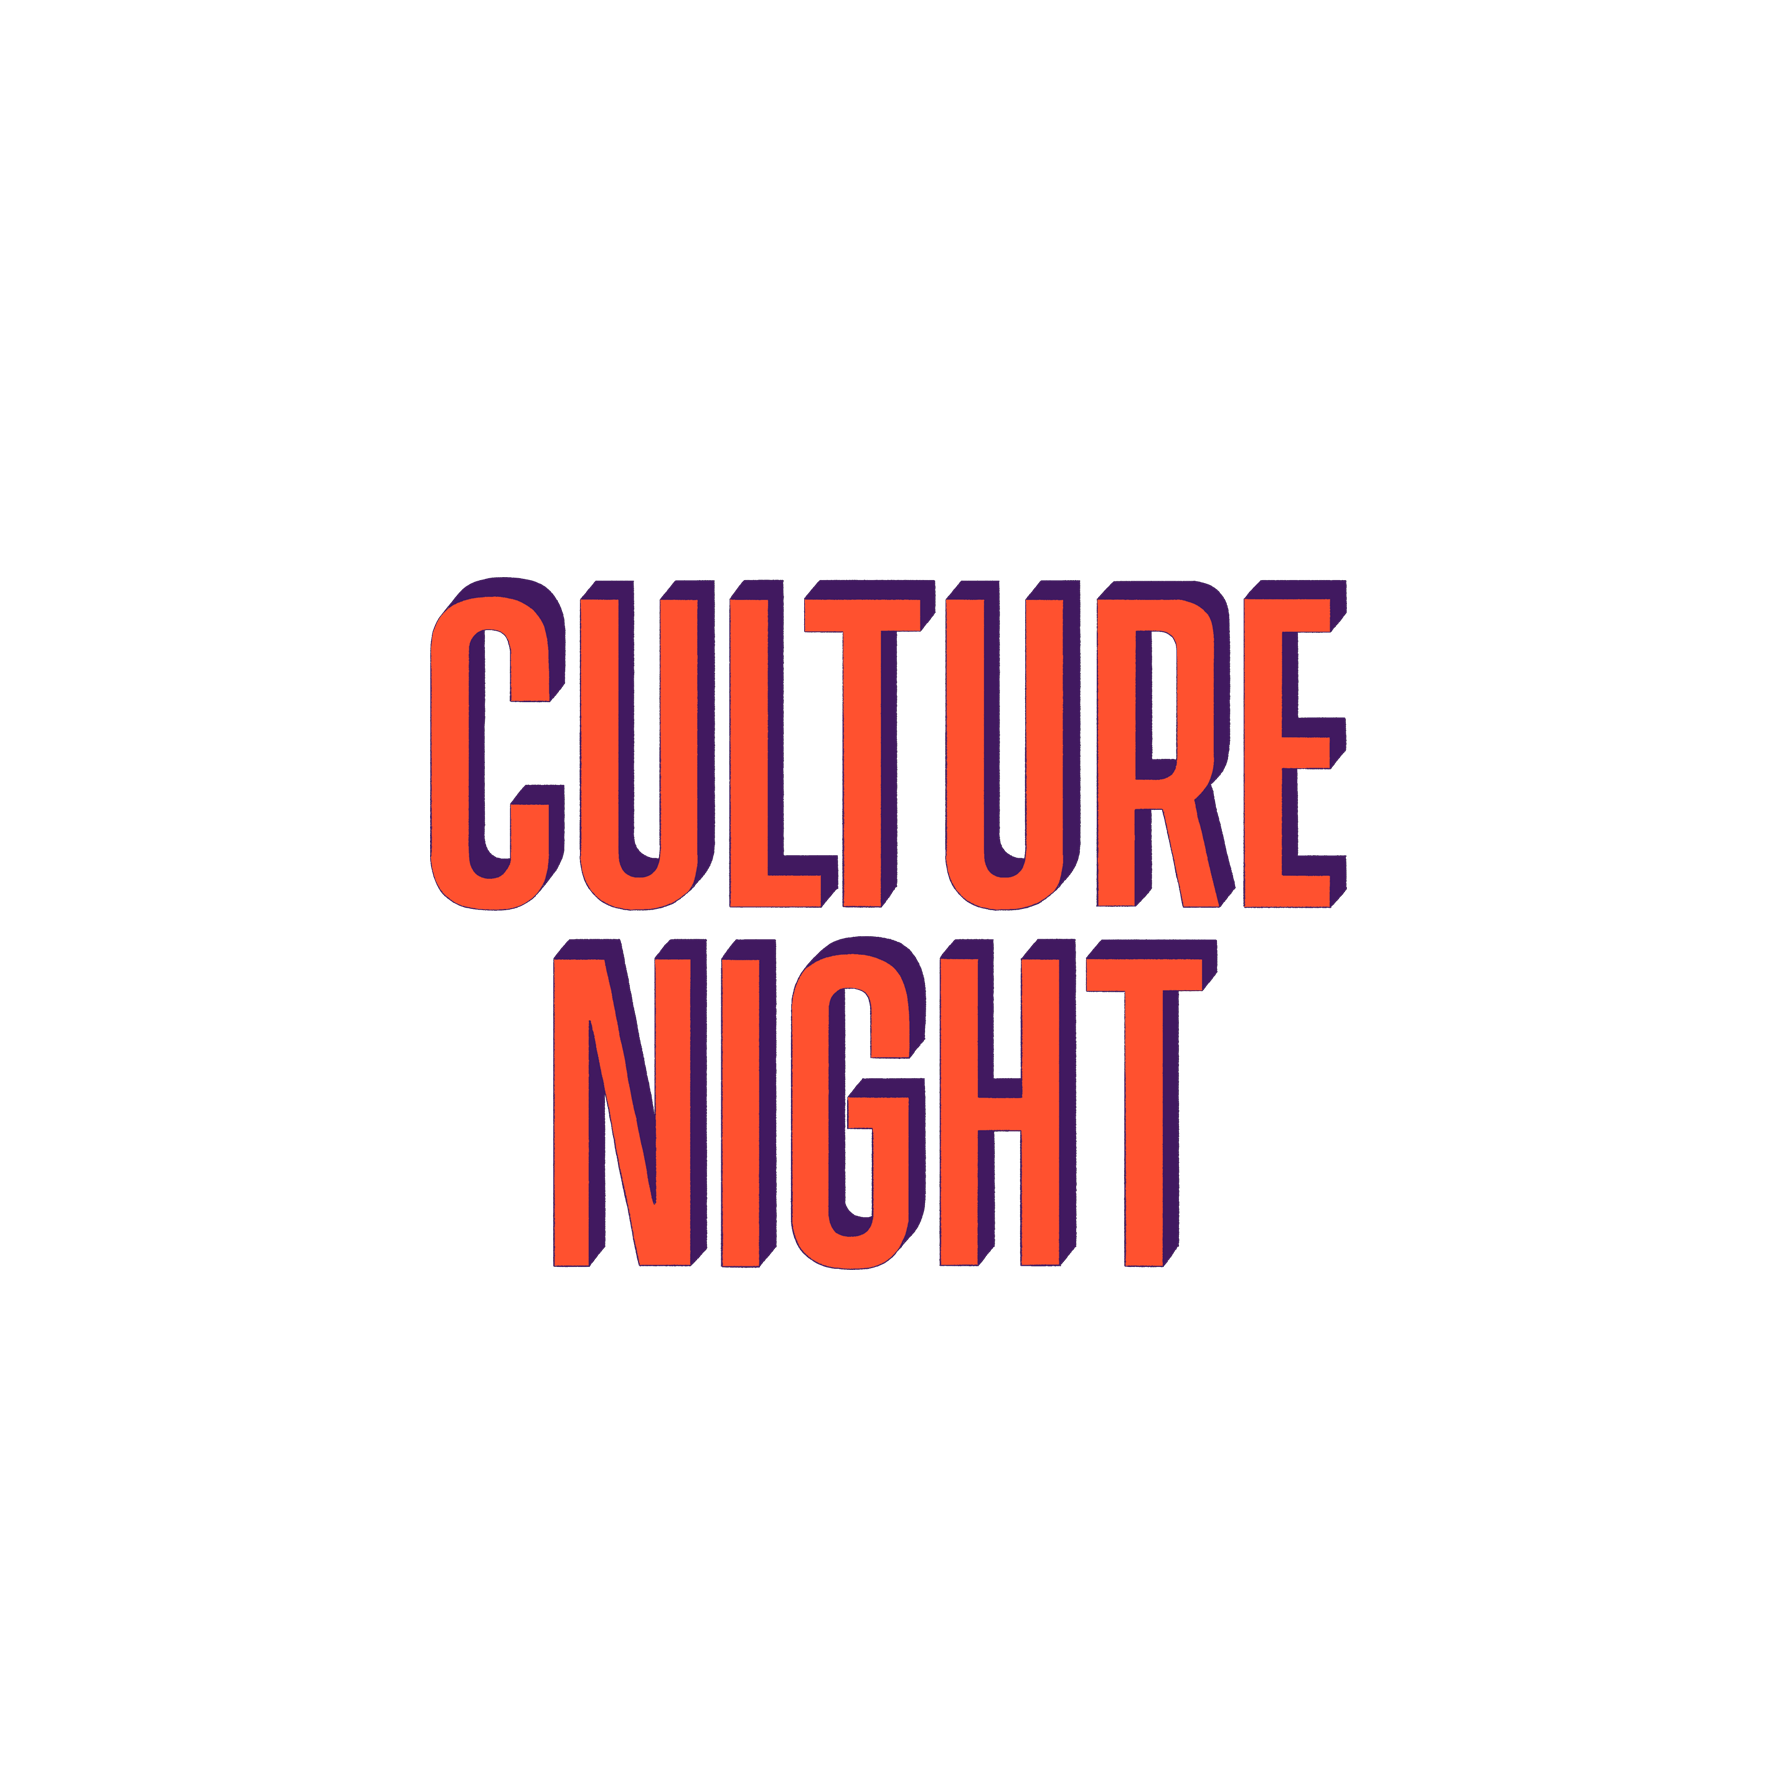 diversity clipart cultural night